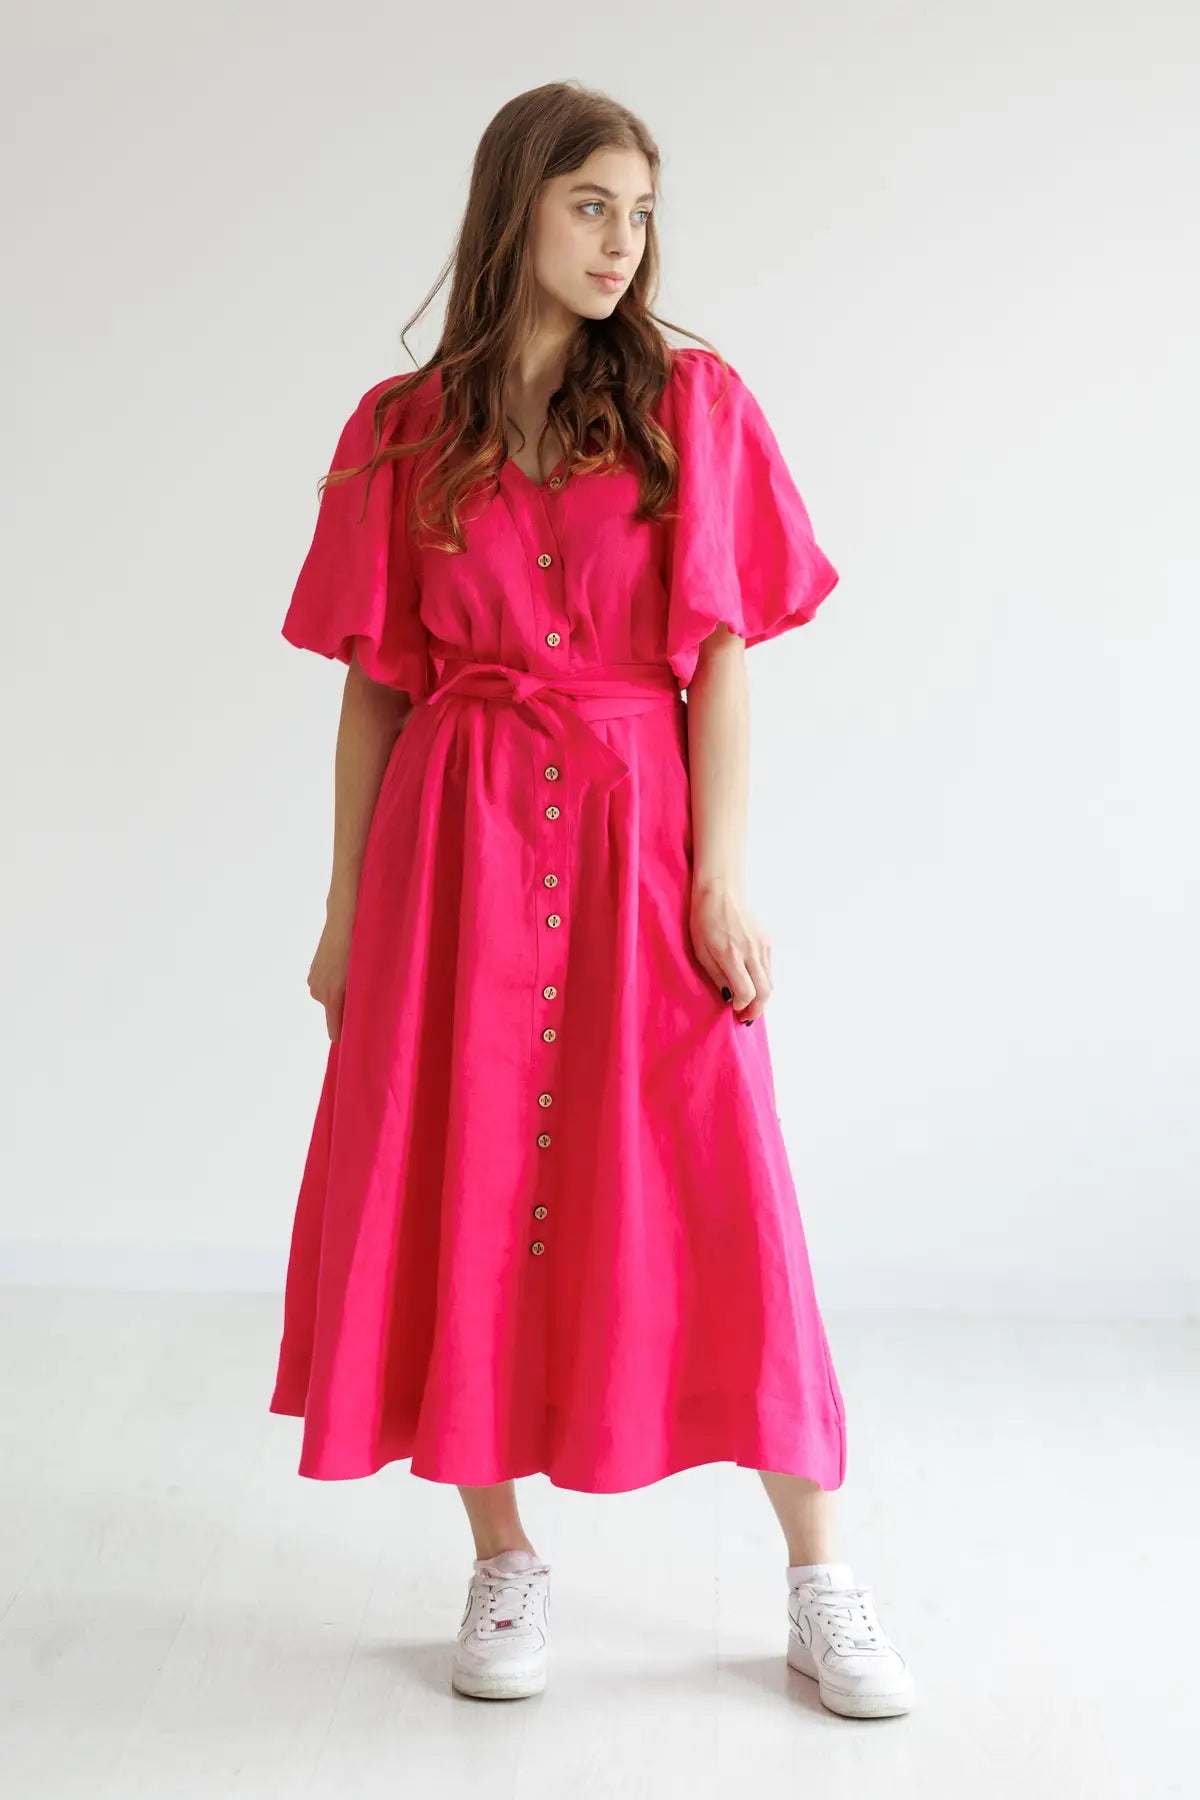 Montgomery linen dress fuchsia